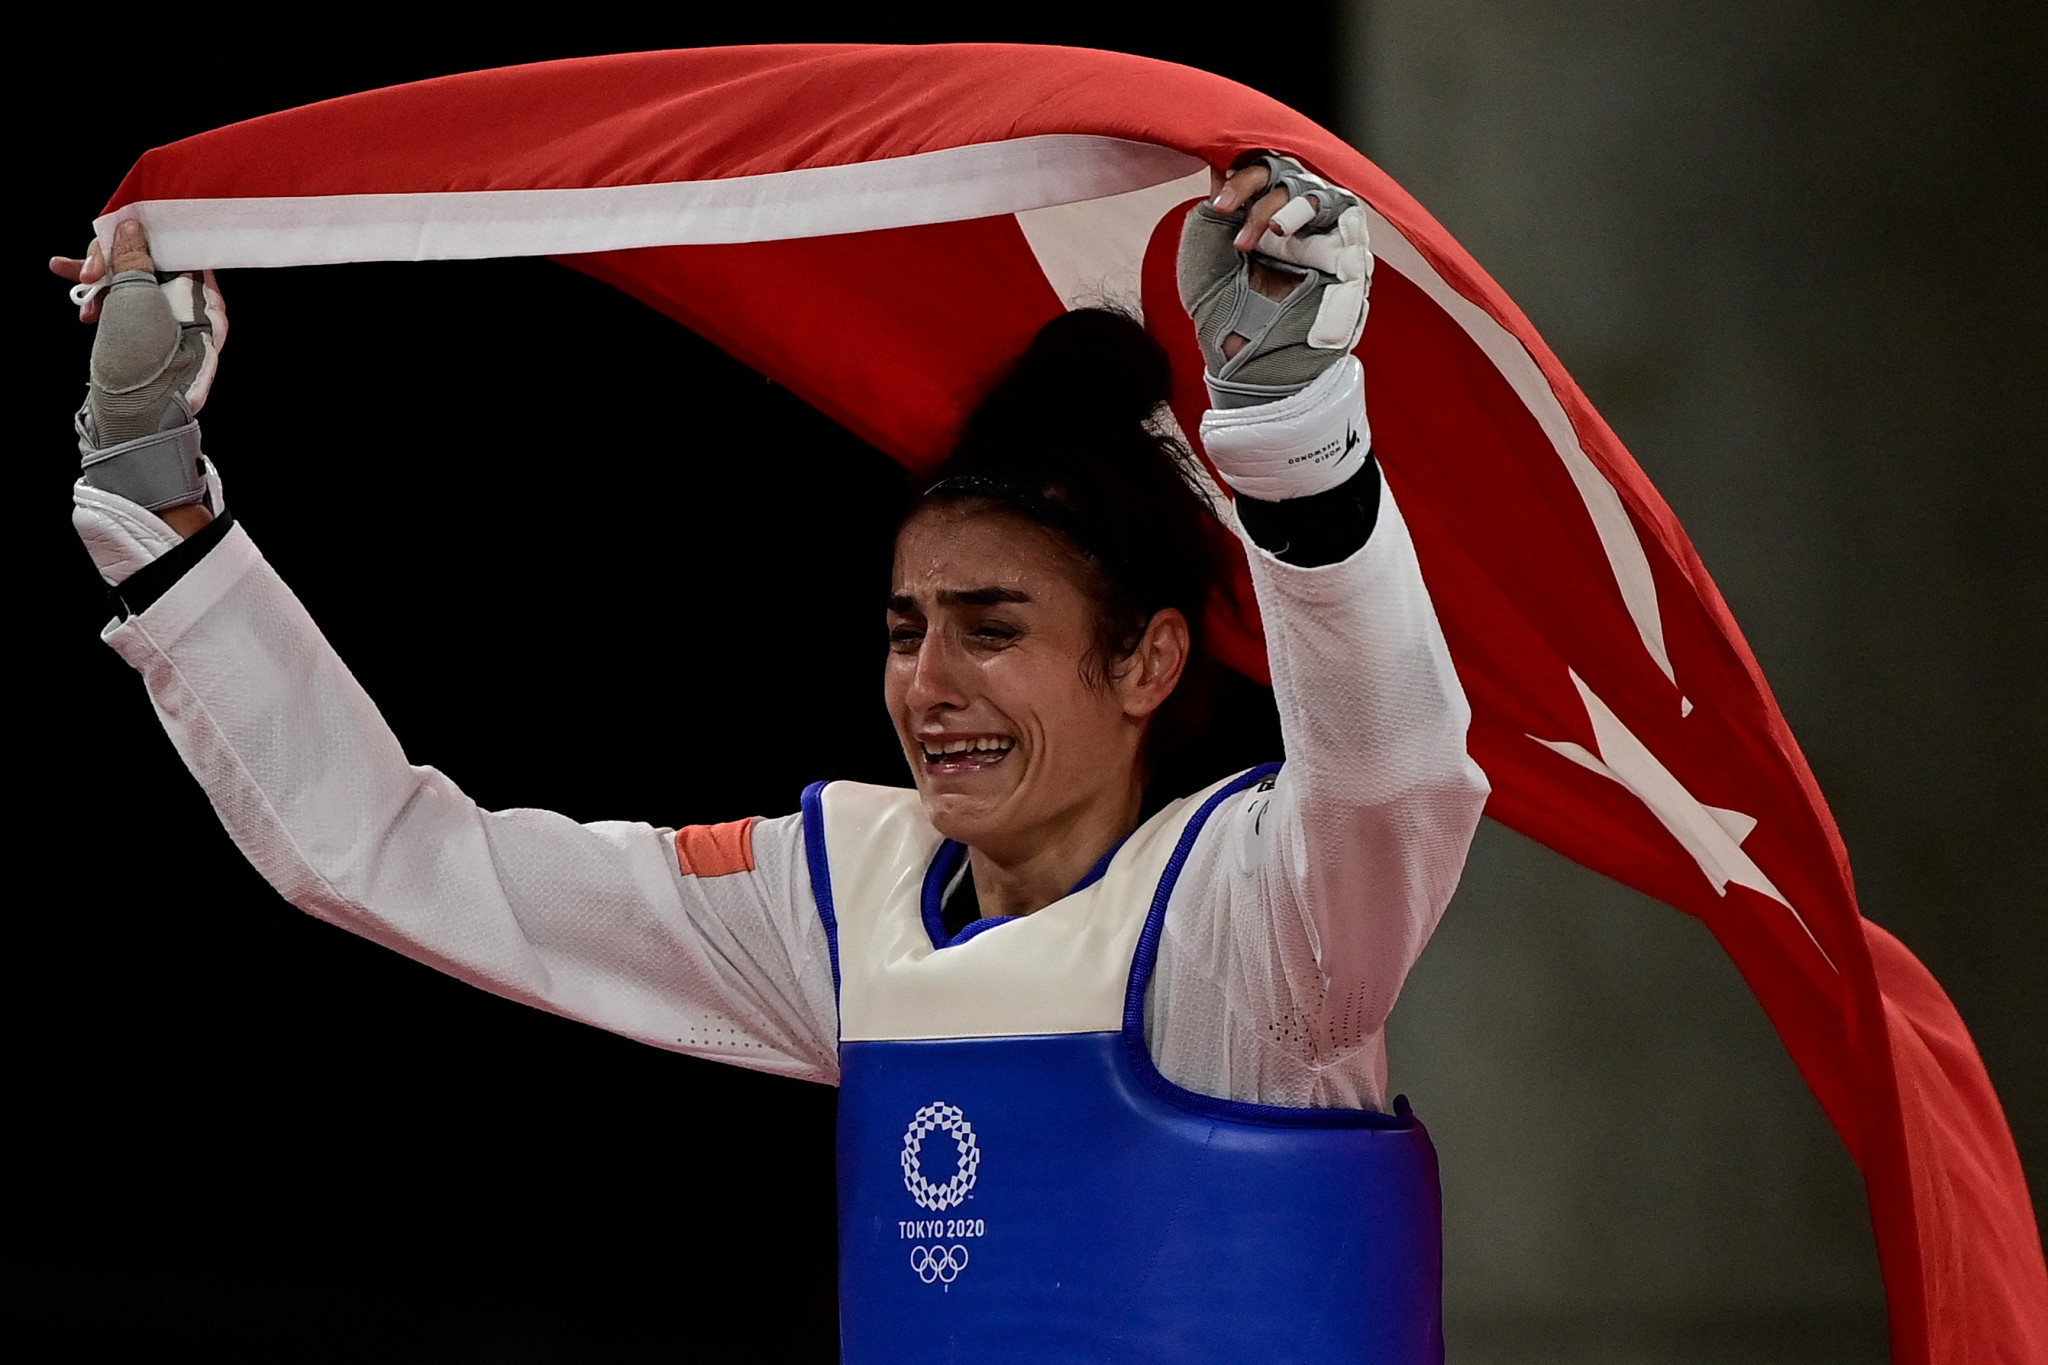 Olympic bronze medallist Hatice Kübra İlgün became European champion in Manchester ©Getty Images